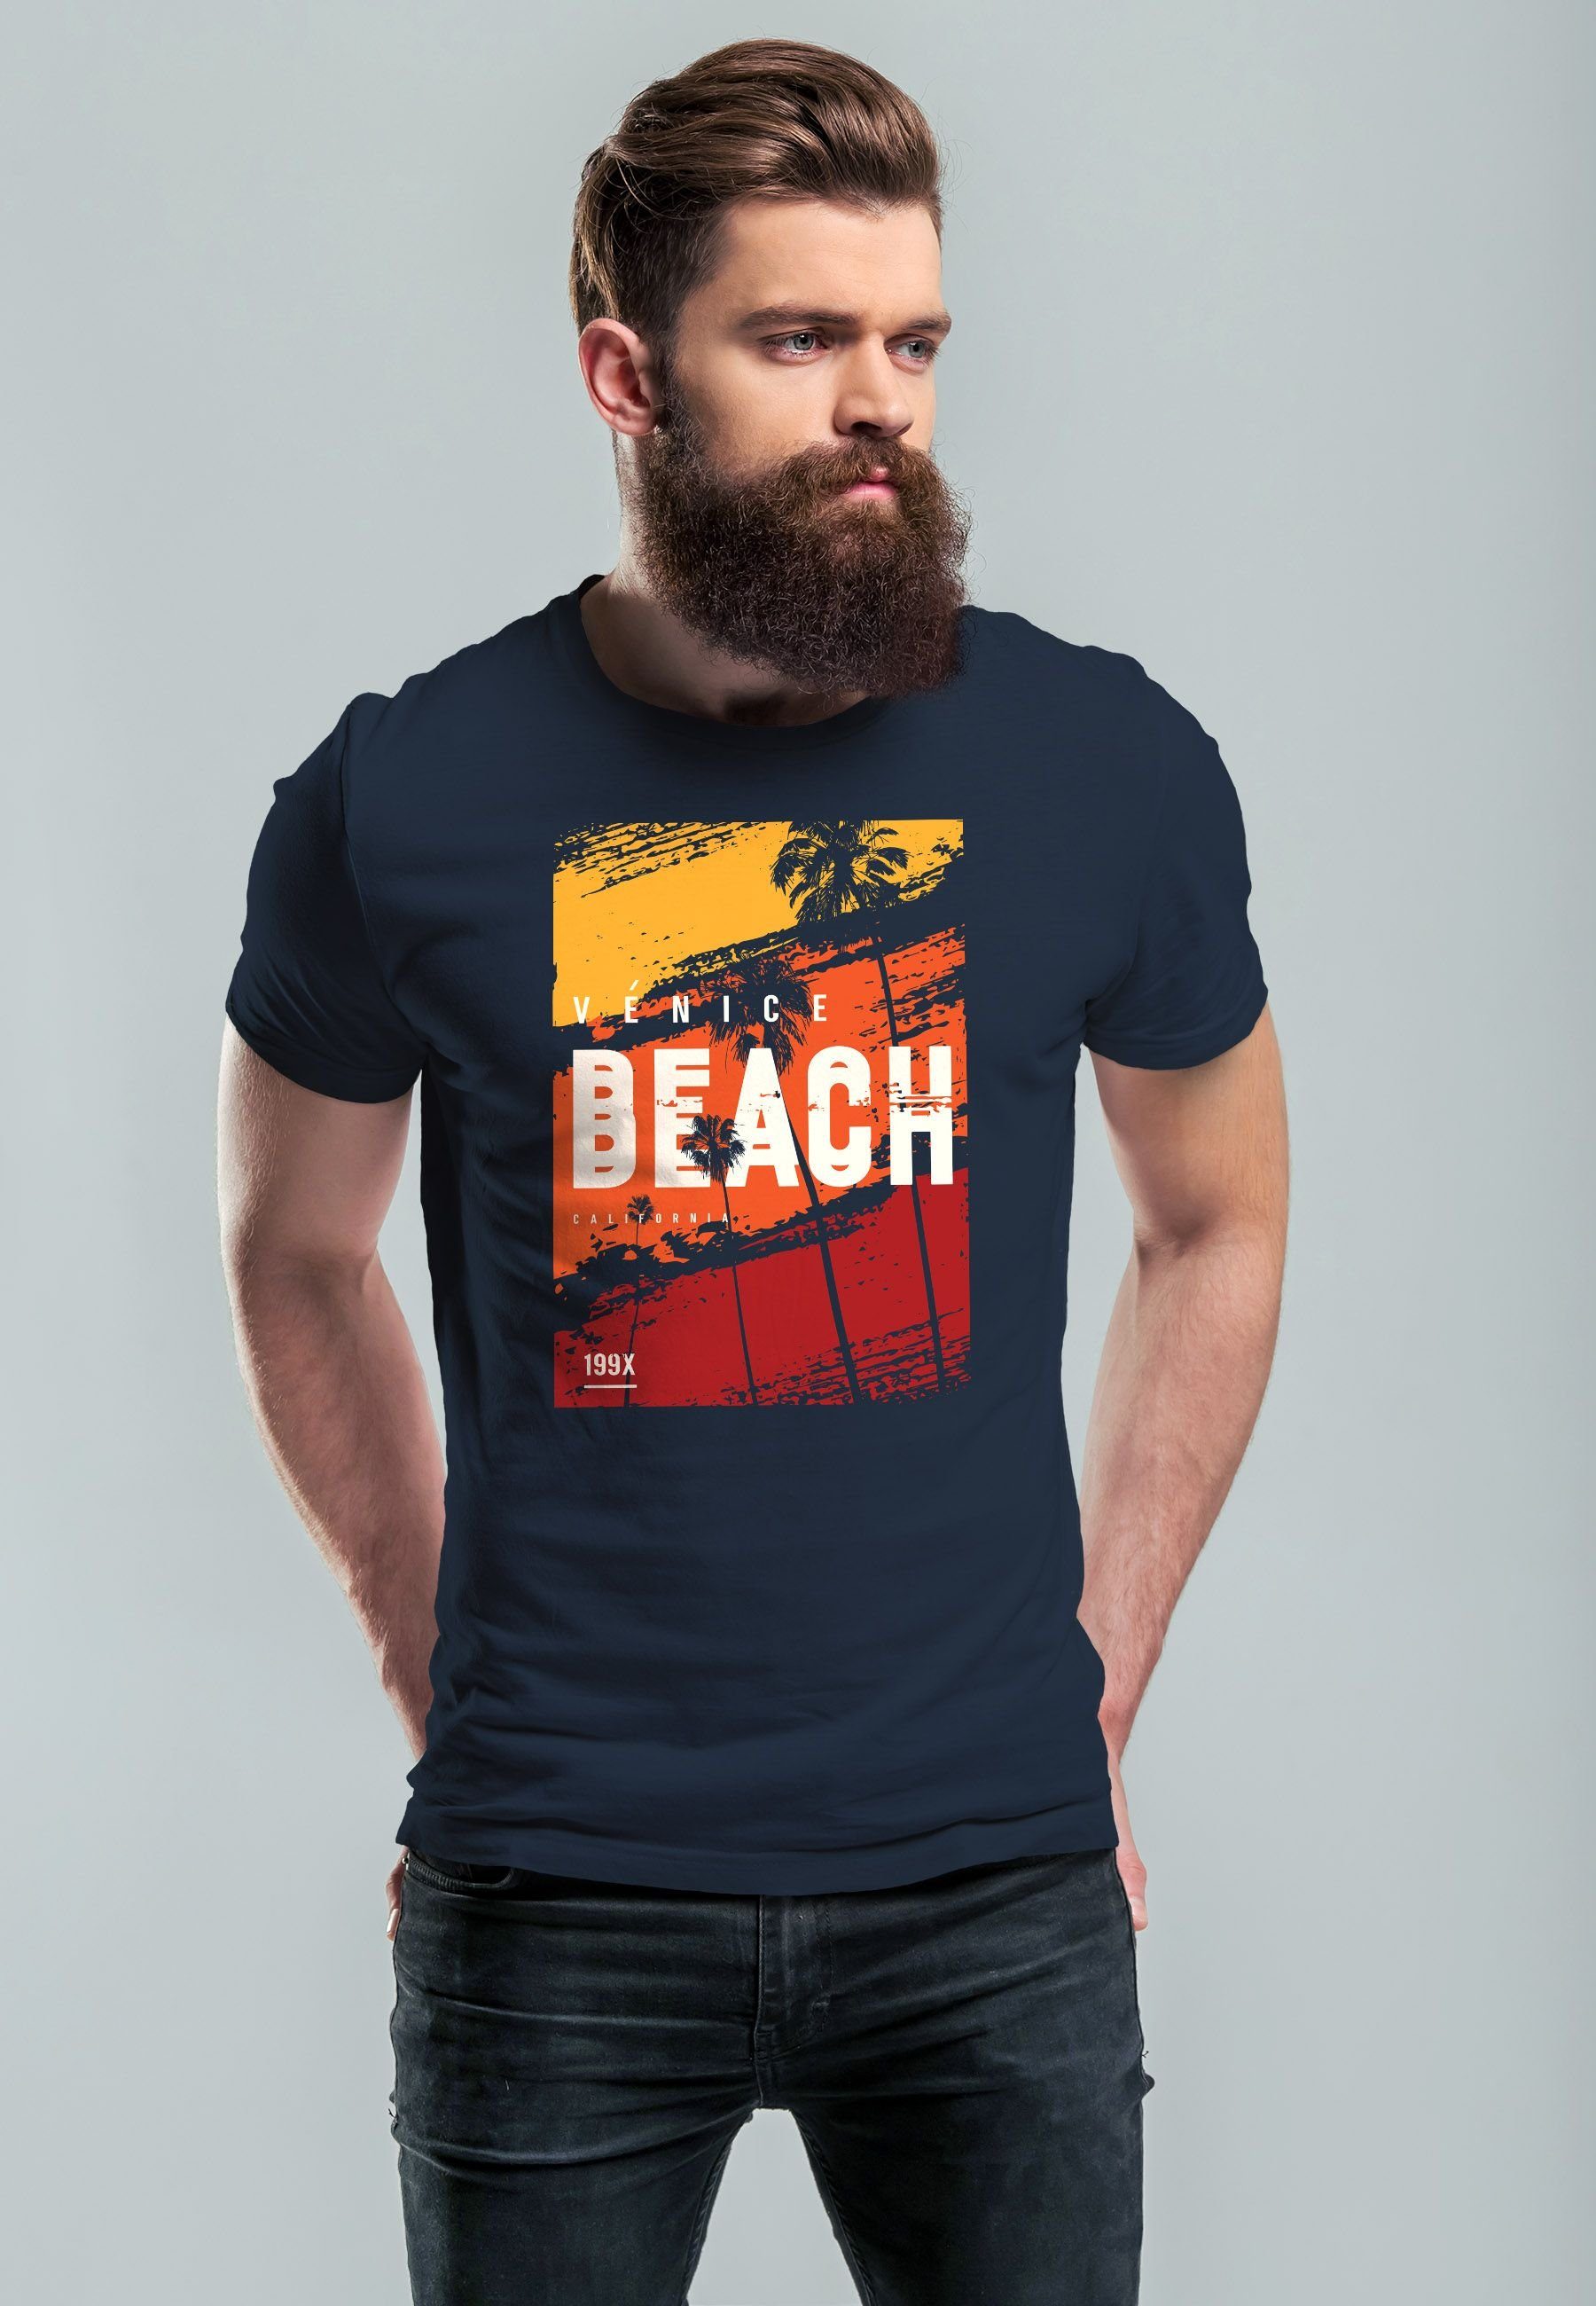 Print-Shirt Neverless Herren Sommer Palme Motiv Beach Strand navy mit Aufdruck Surfing Print Venice T-Shirt